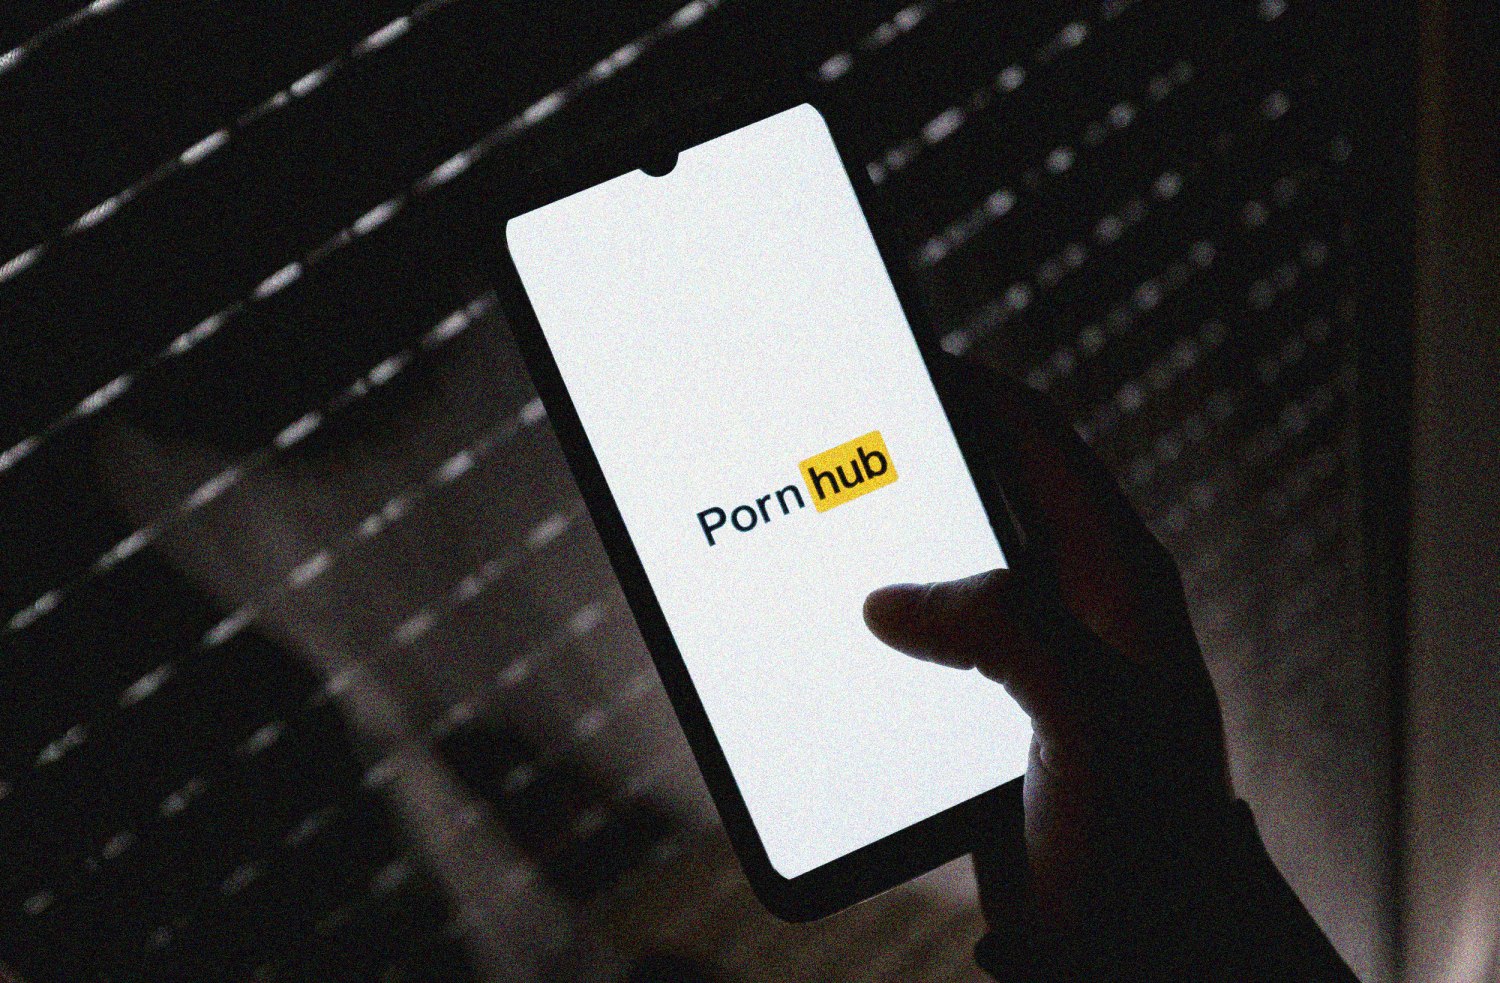 Pronhub App - Meet Pornhub's new owner: Ethical Capital Partners